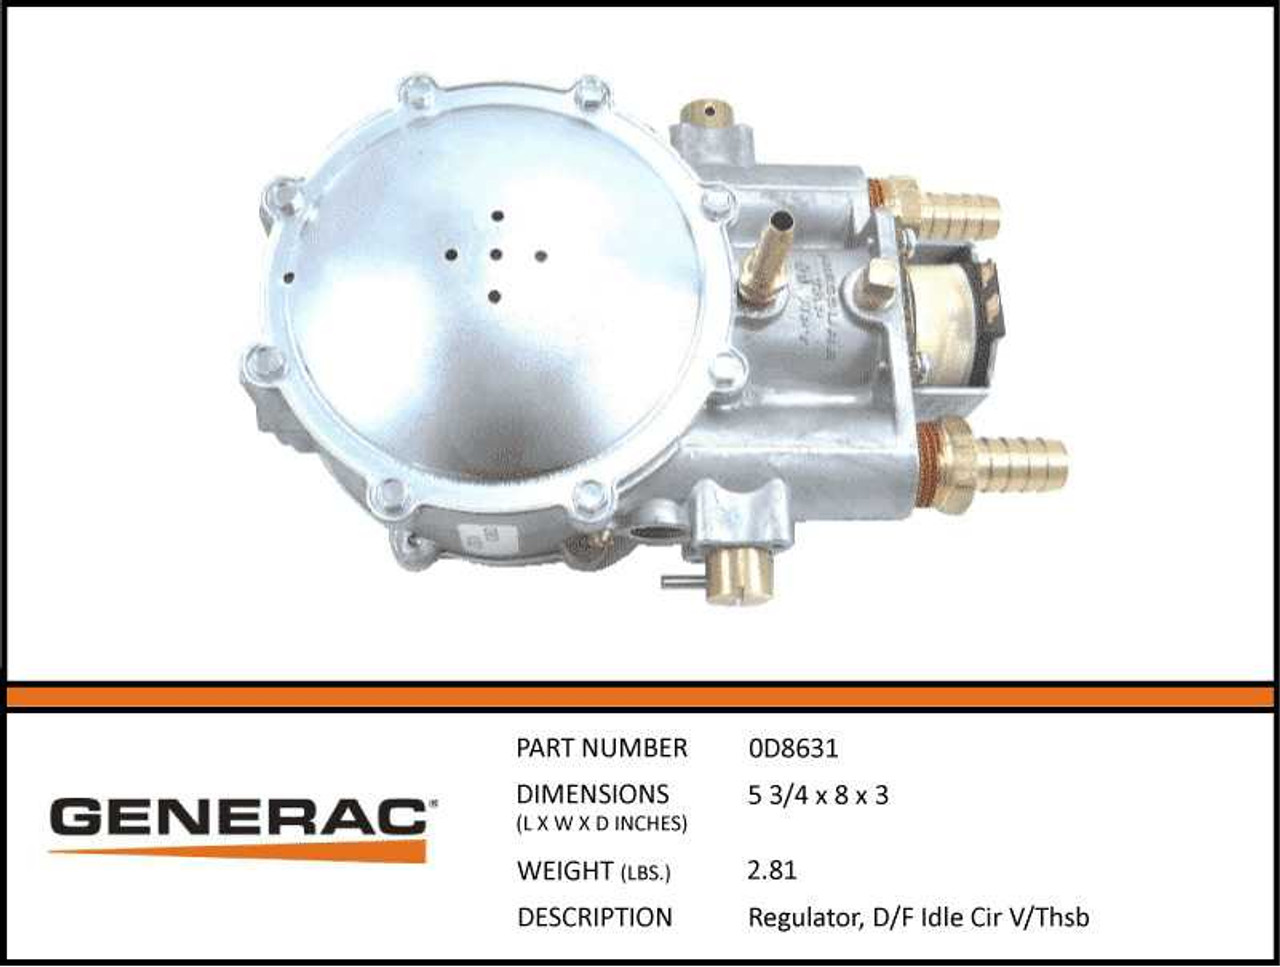 Generac 0D8631 Dual Fuel Regulator with Specs